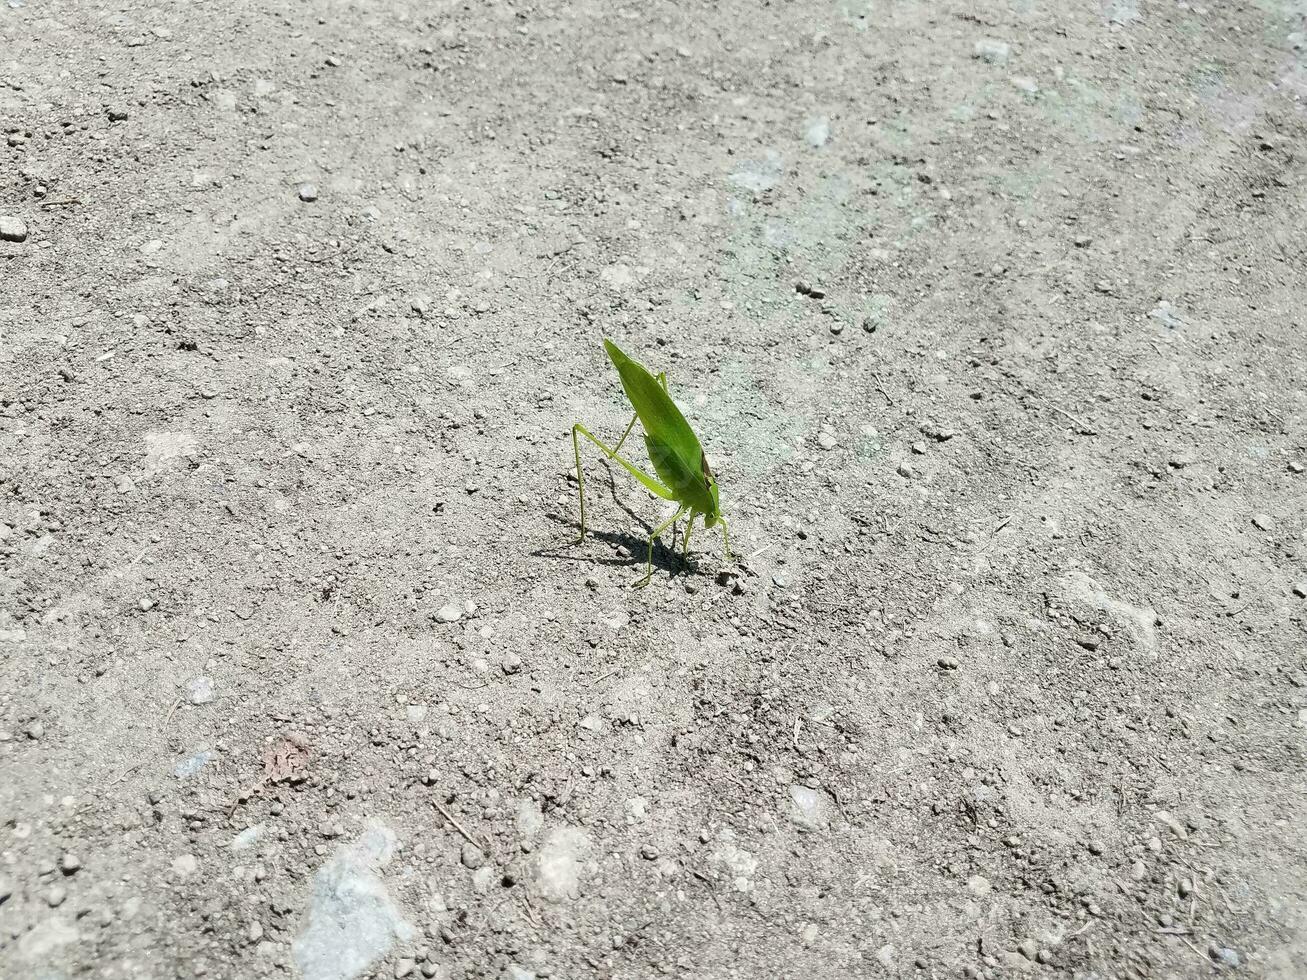 grünes blattförmiges insekt auf dem boden foto